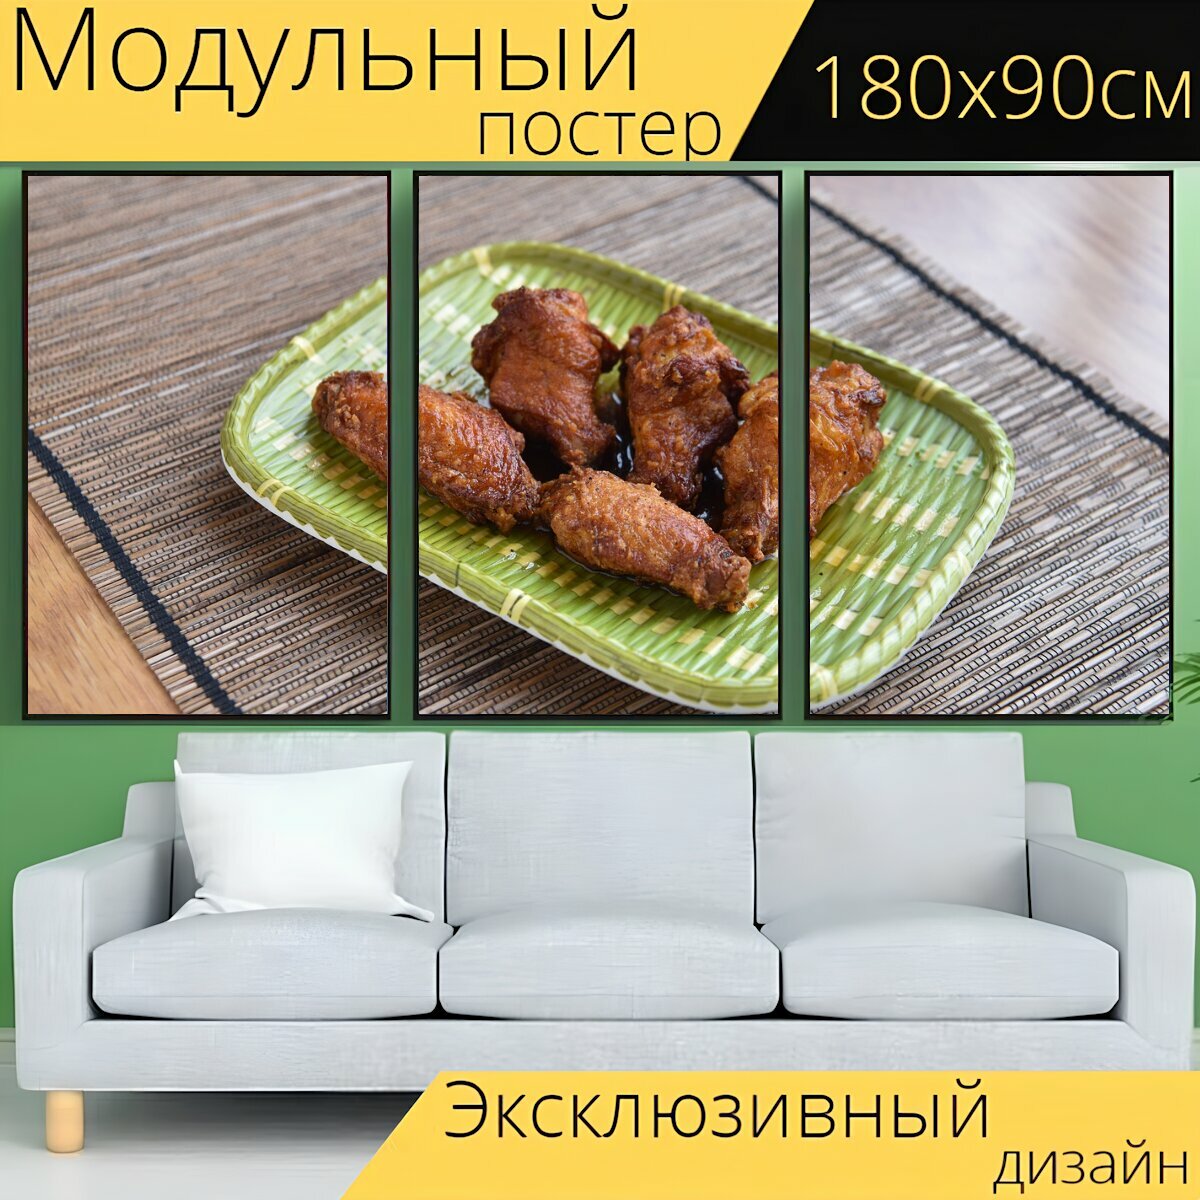 Модульный постер "Азиатские куриные крылышки, жареные крылья, тарелка" 180 x 90 см. для интерьера